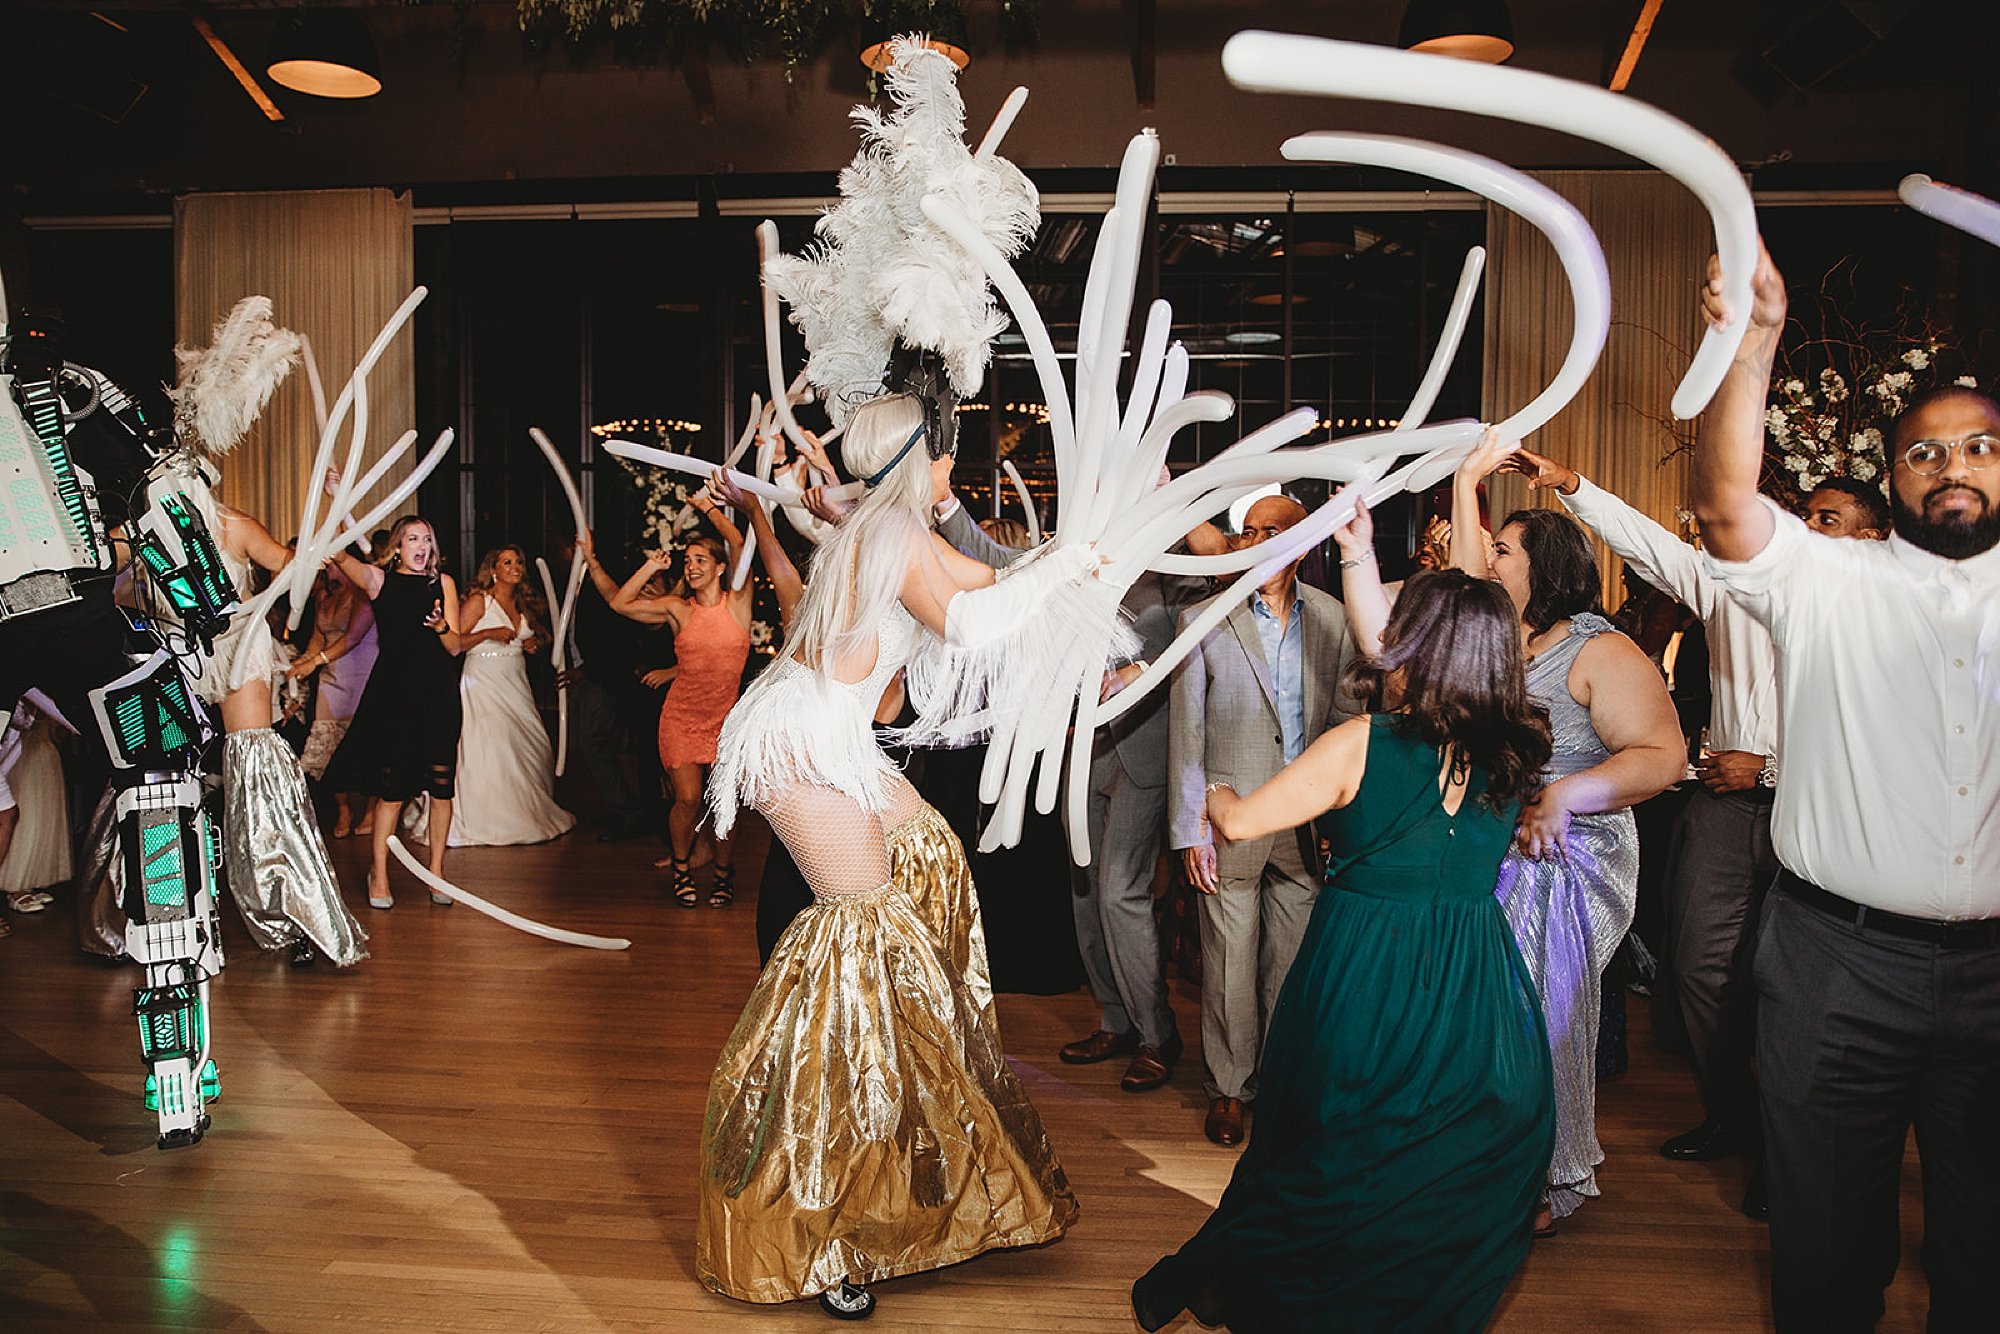 Hora Loco dances during Beacon NY wedding reception